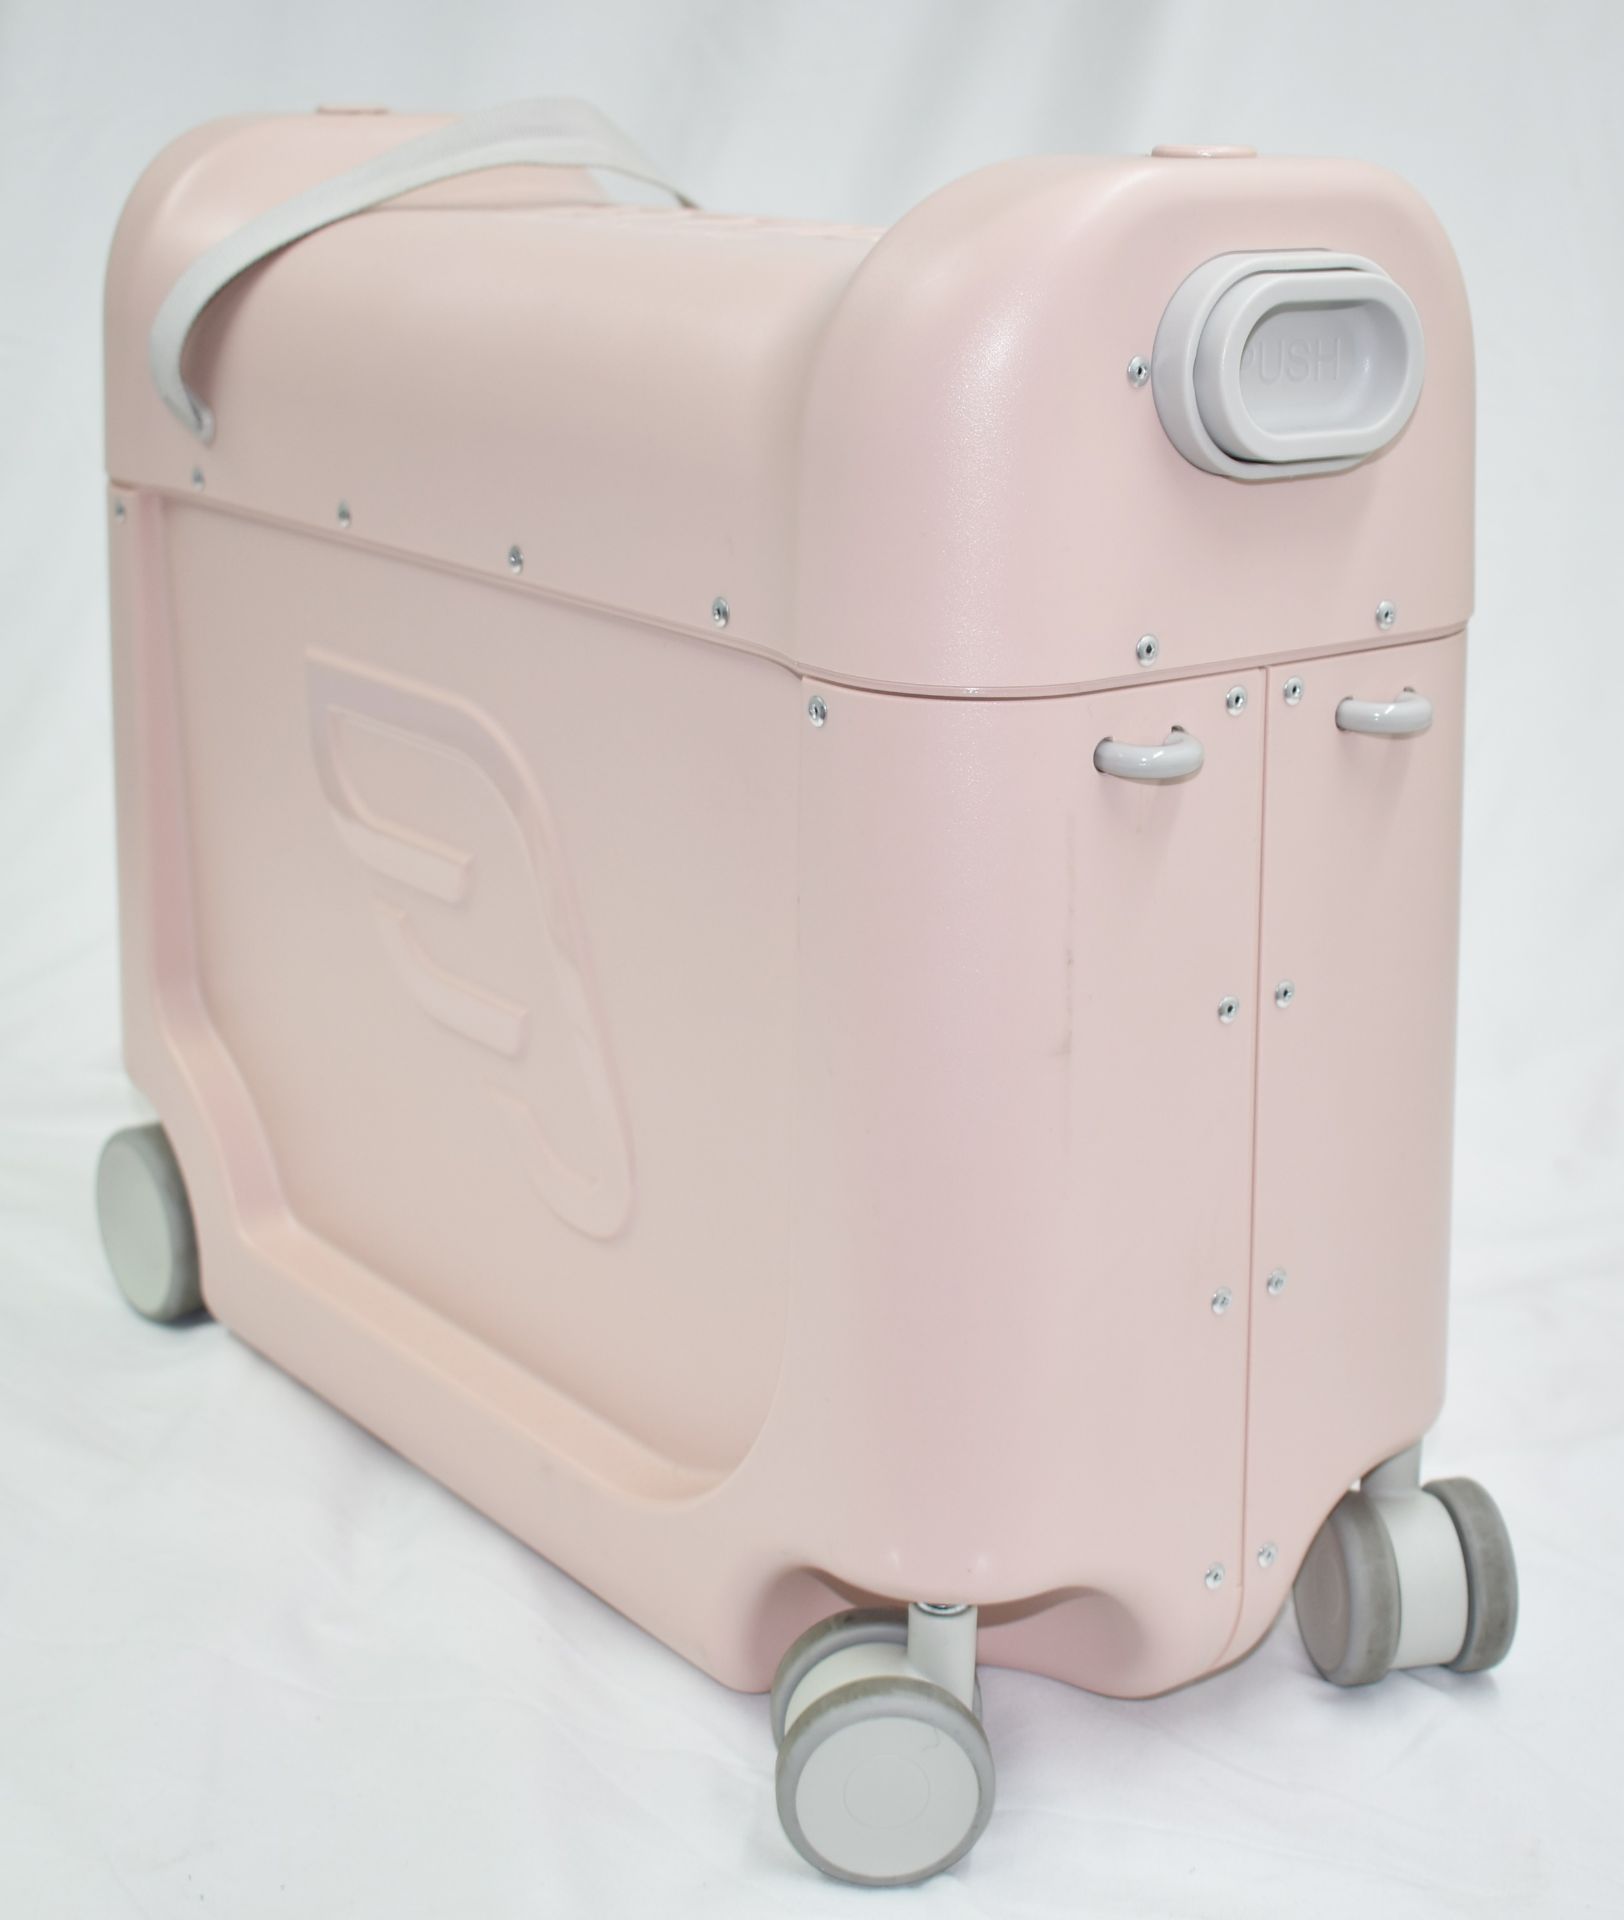 1 x STOKKE Jetkids' Premium Ride-on Suitcase / Bed Box - Original Price £179.00 - Ex-Display - Image 7 of 11